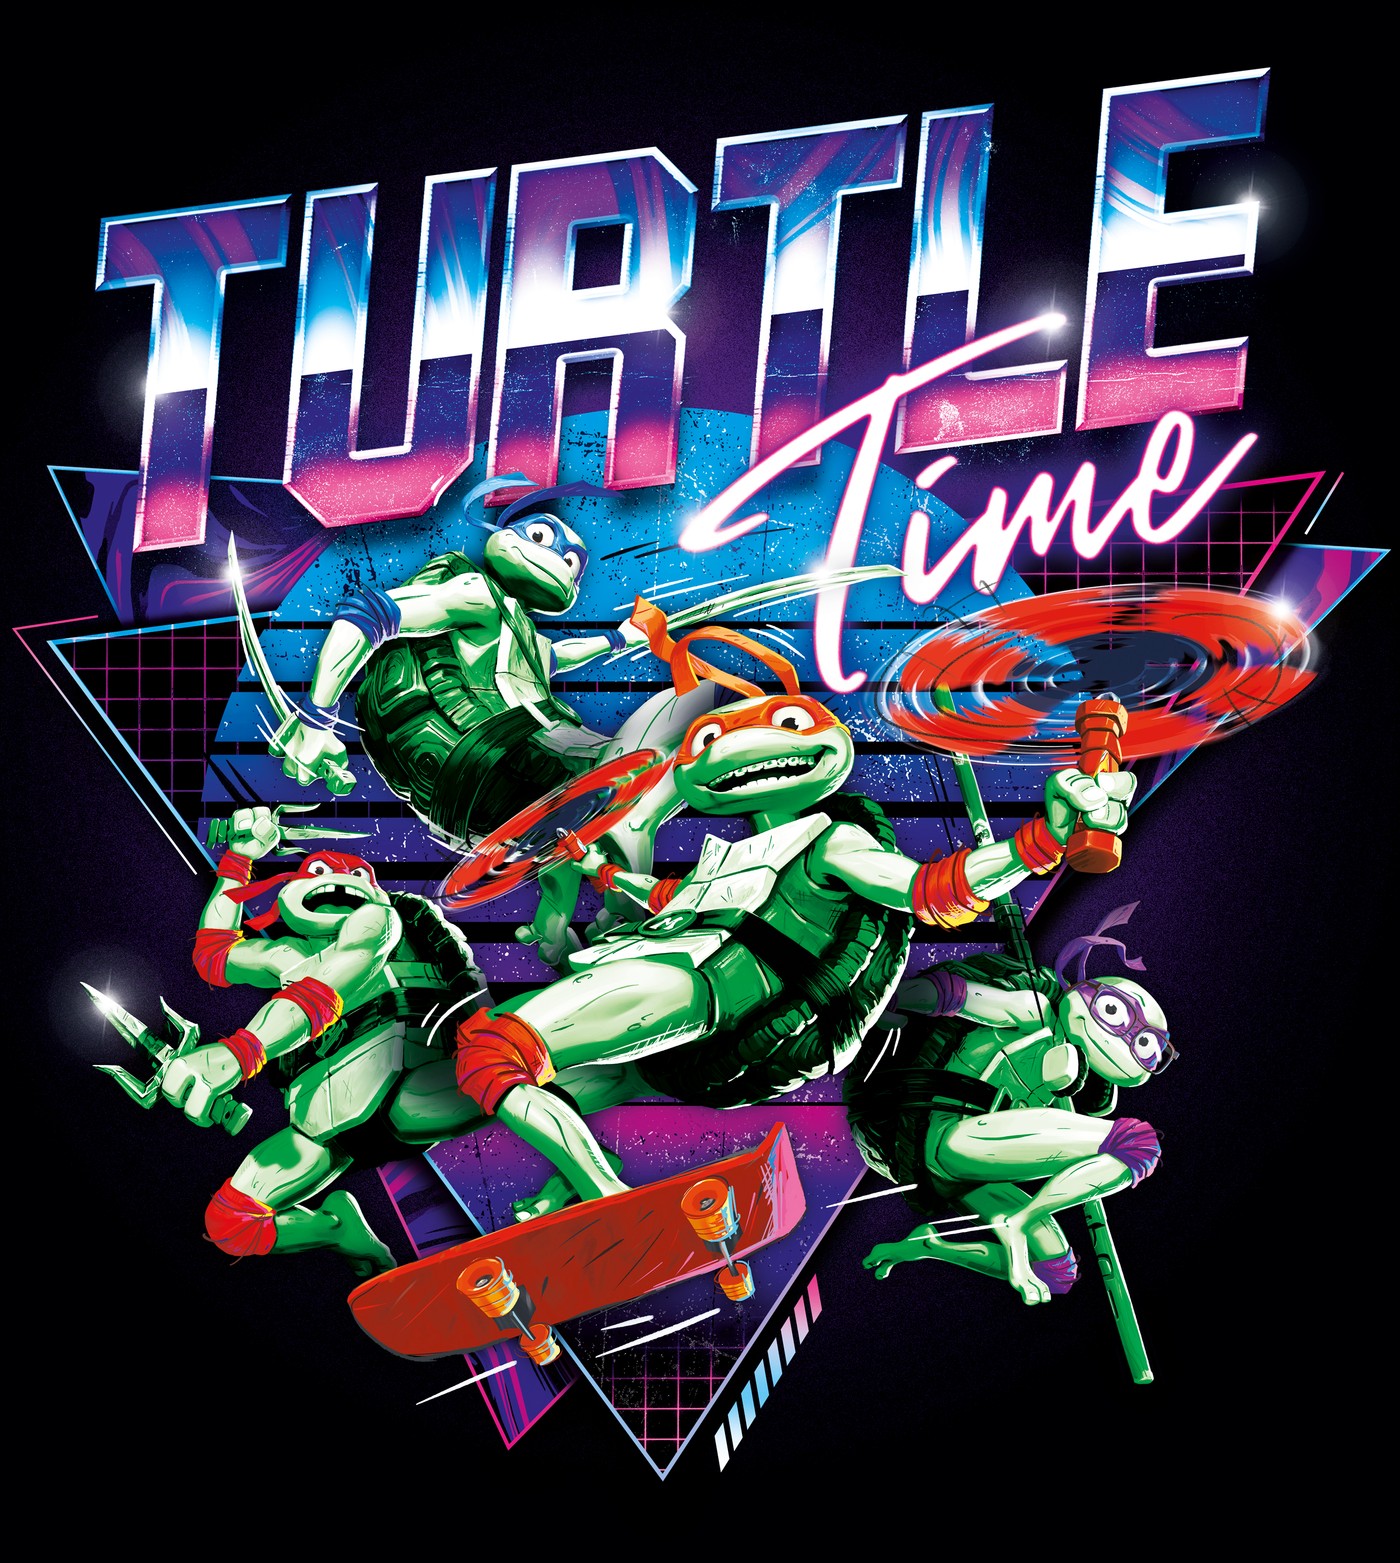 A Full Guide To The New Teenage Mutant Ninja Turtles Movie